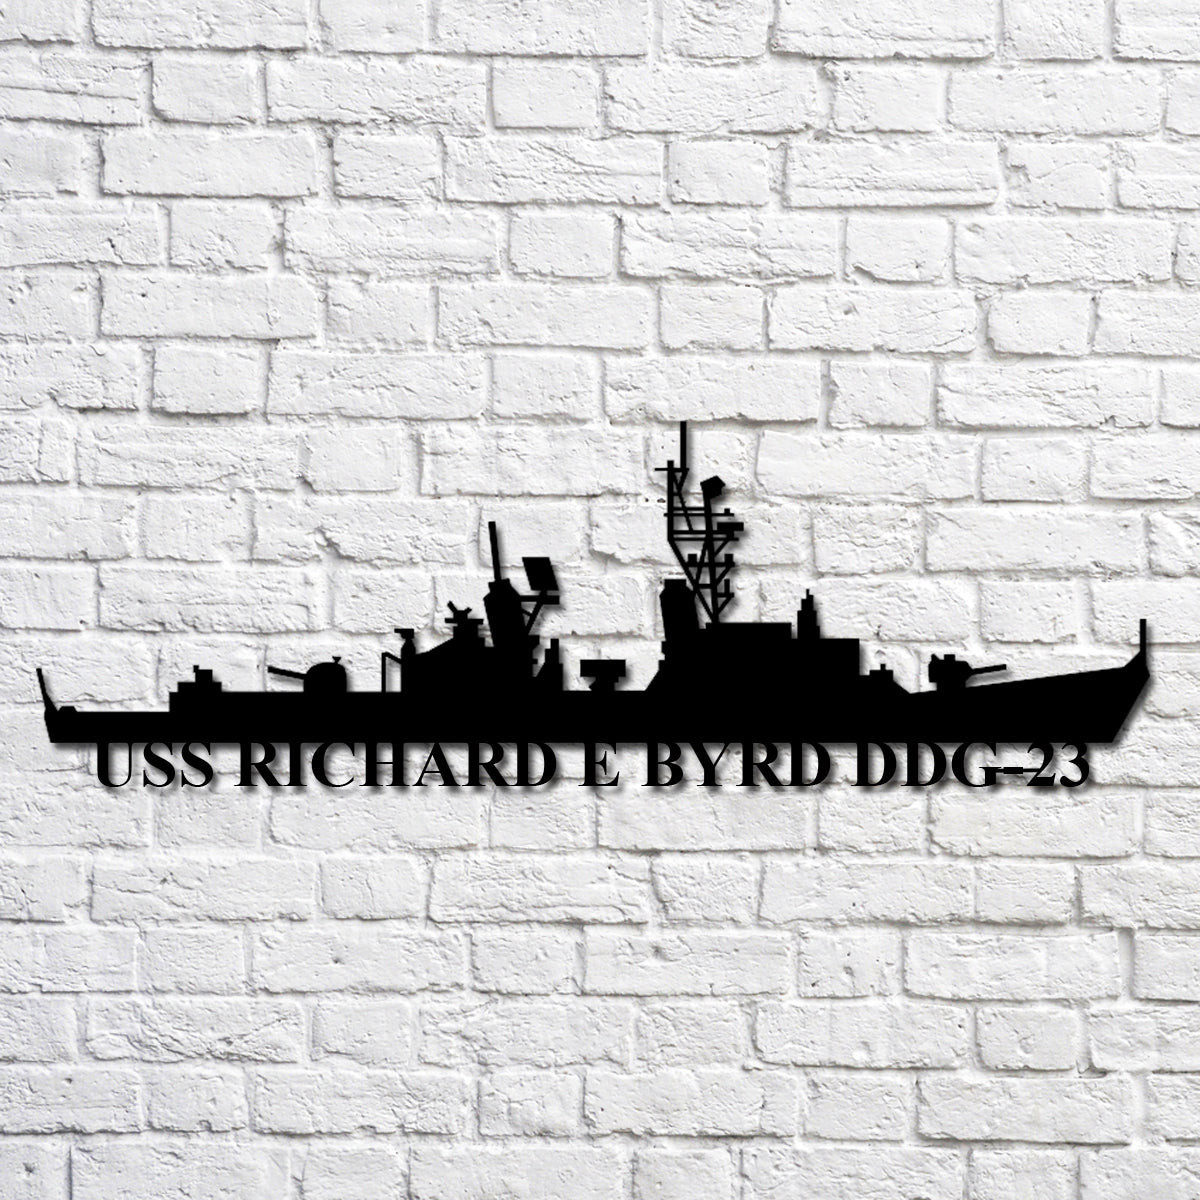 Uss Richard E Byrd Ddg 23 Navy Ship Metal Art, Gift For Navy Veteran, Navy Ships Silhouette Metal Art, Navy Home Decor Laser Cut Metal Signs Custom Gift Ideas 12x12IN